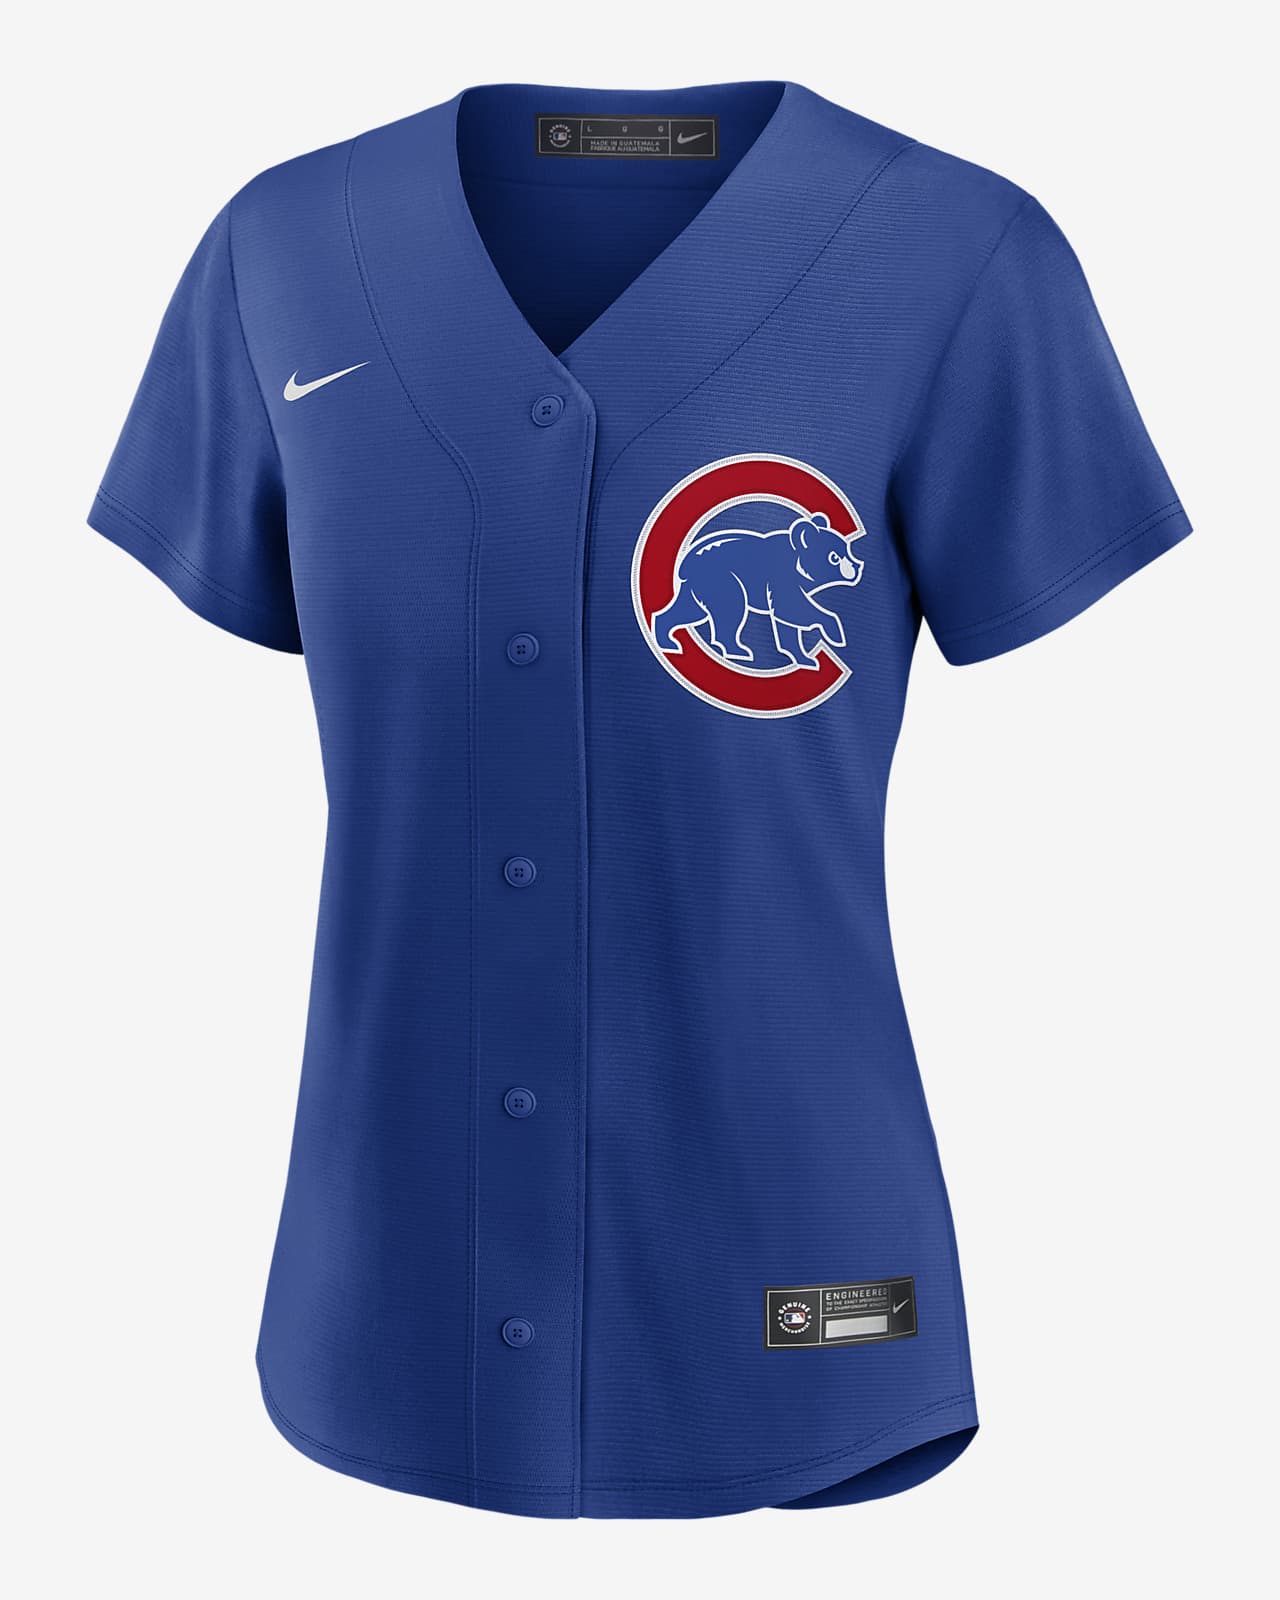 MLB Chicago Cubs Women's Replica Baseball Jersey